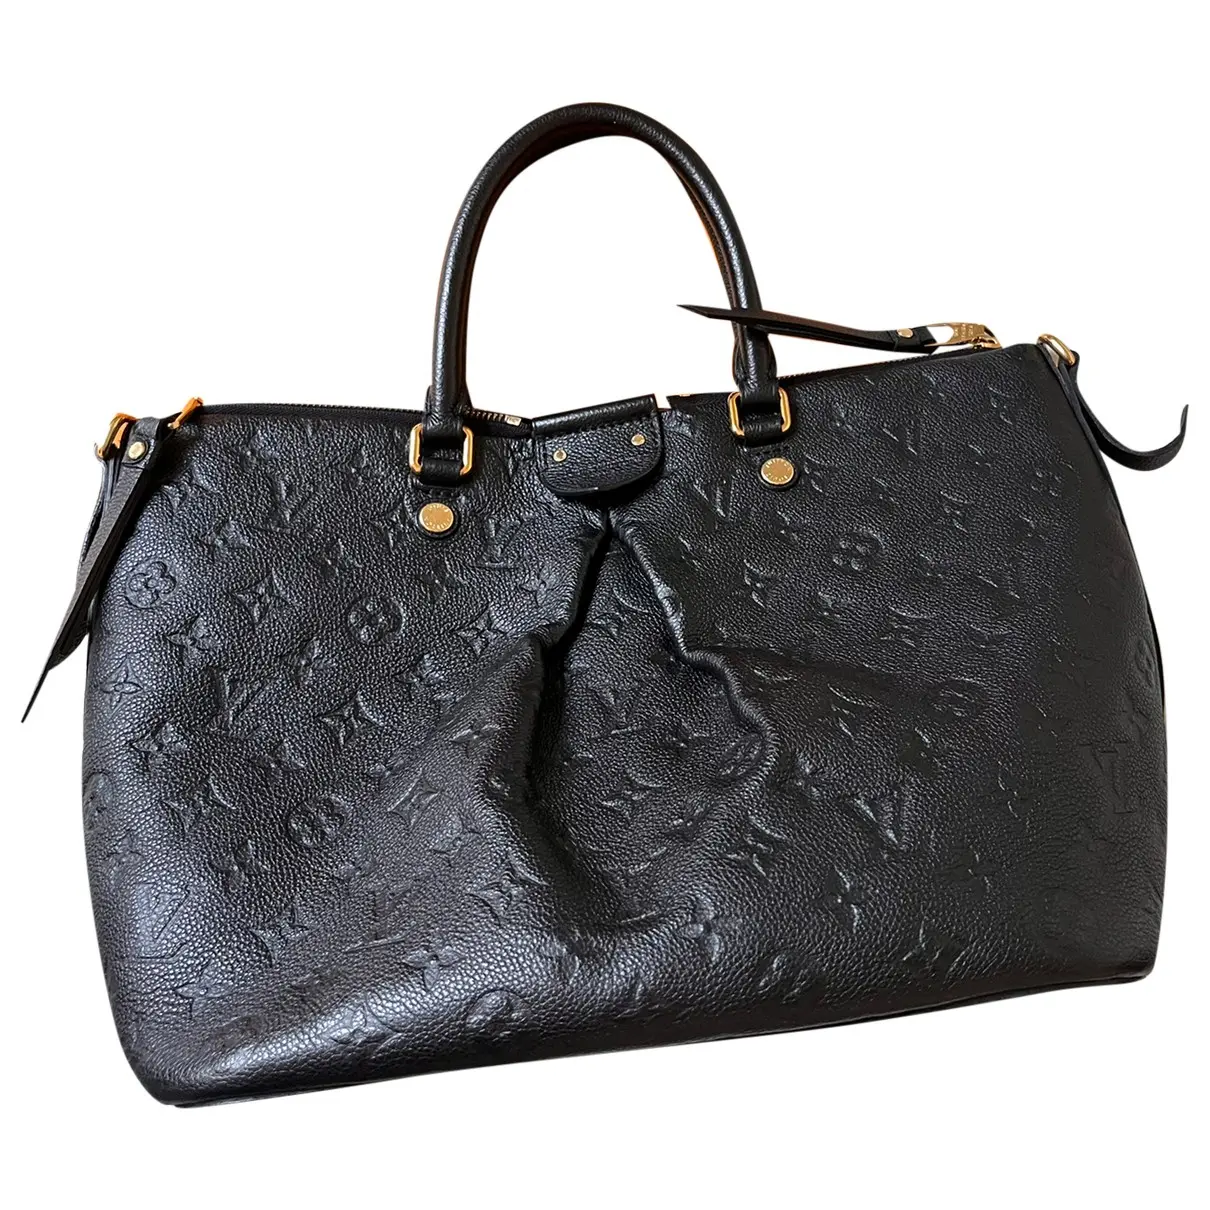 Mazarine leather tote Louis Vuitton